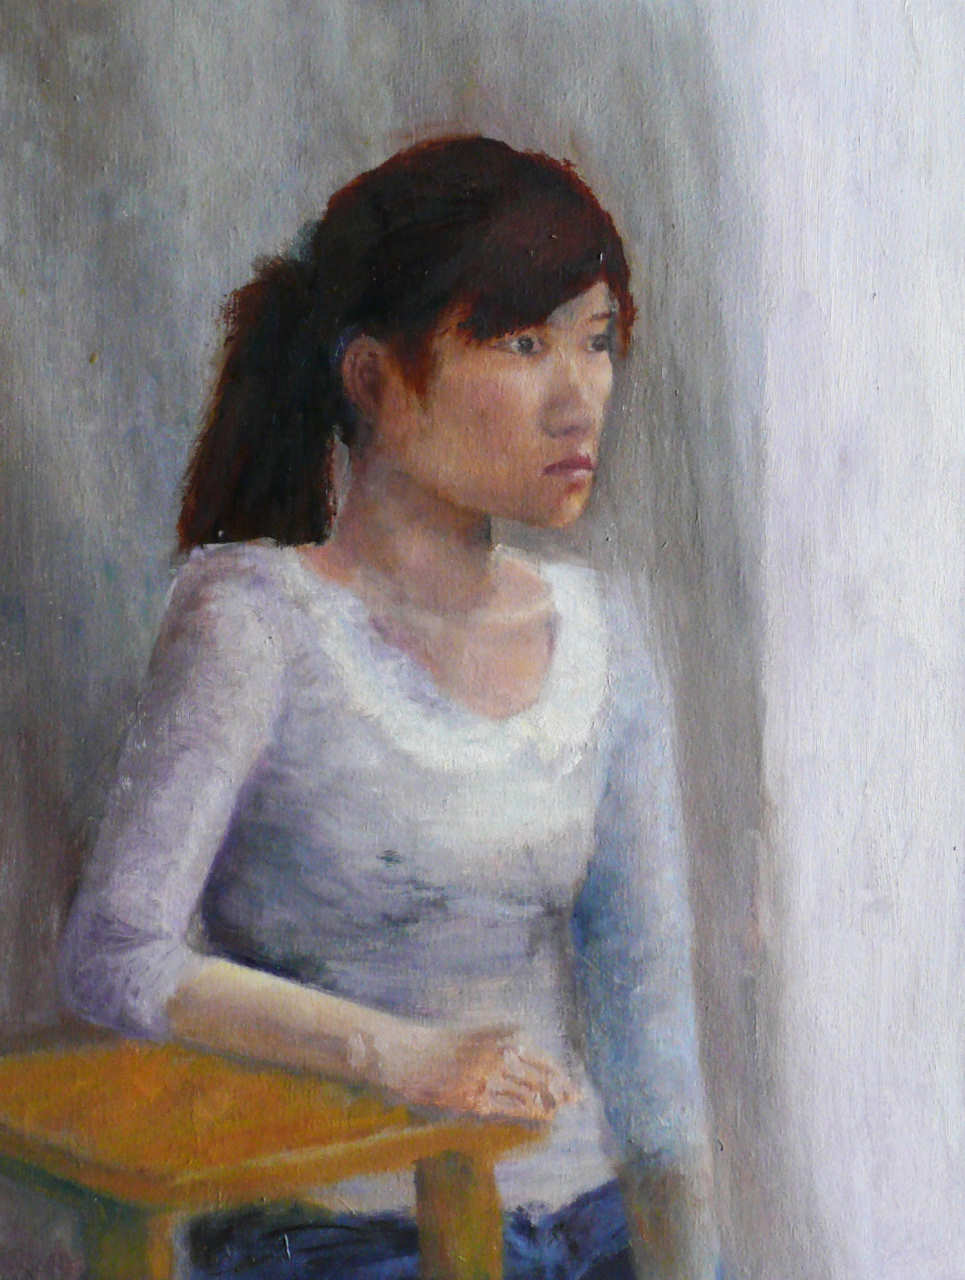  Oil on canvas. 2011 